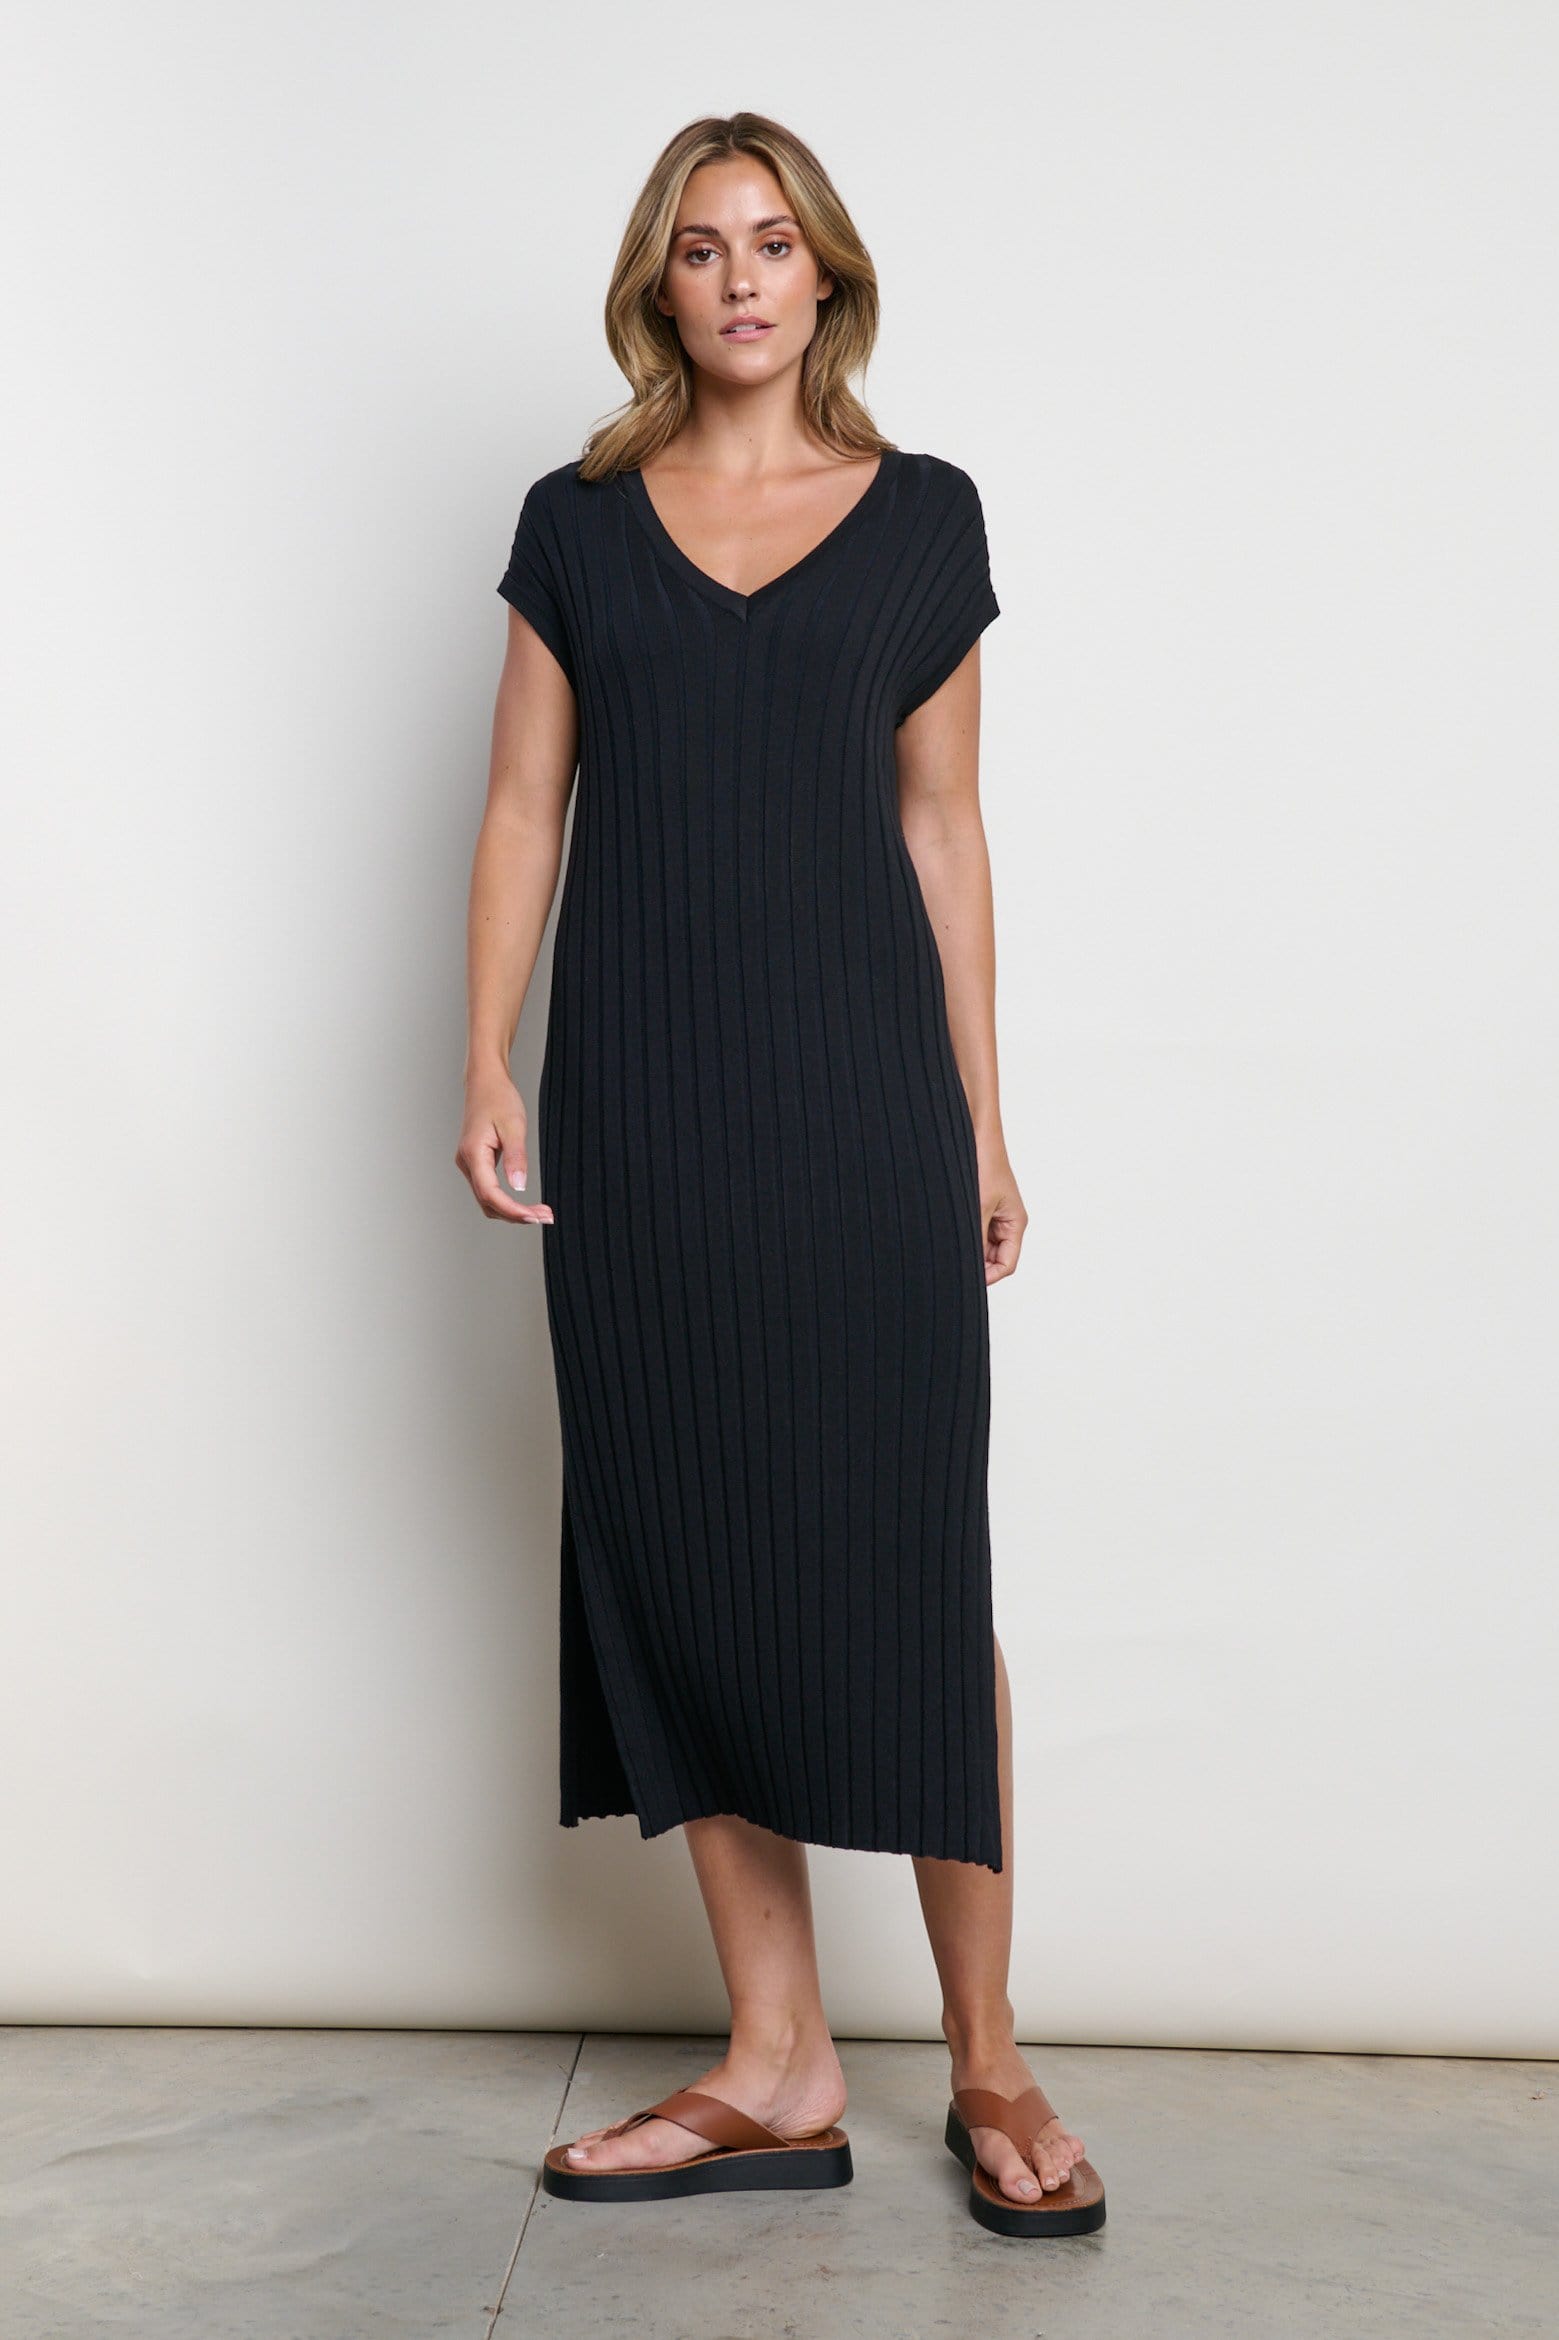 Elsie Knit Dress - Black